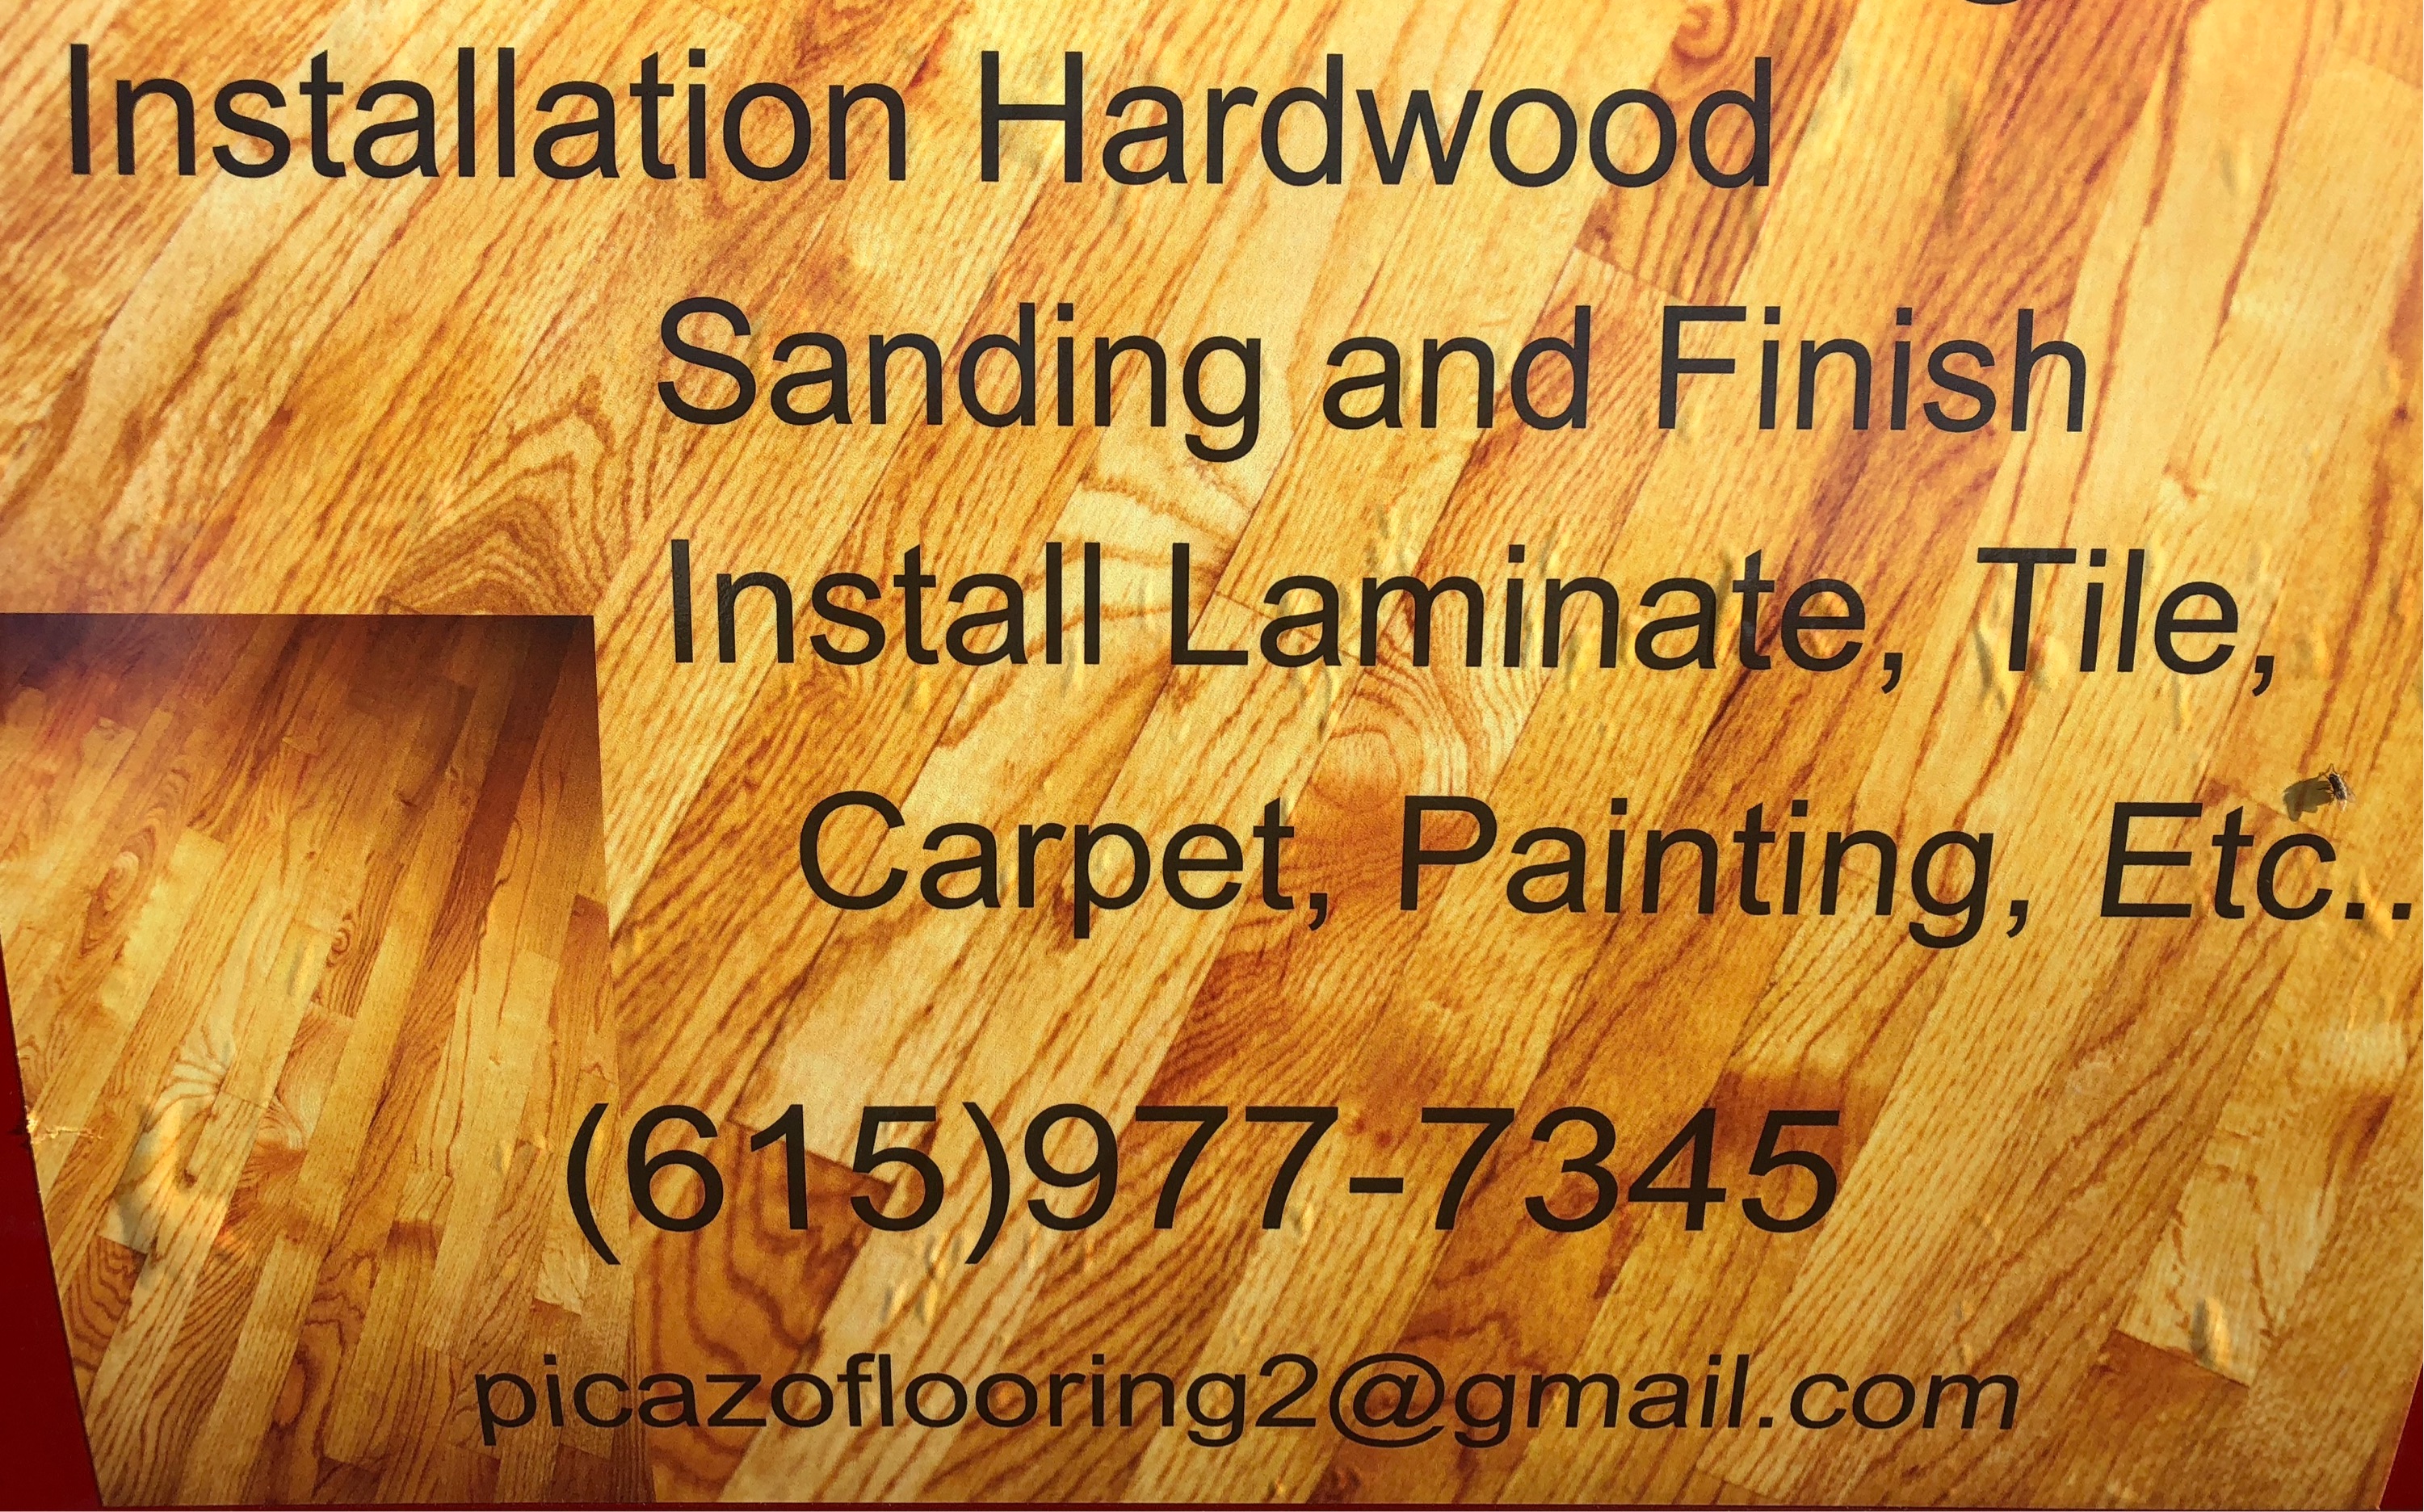 Picazo Flooring & Service Logo